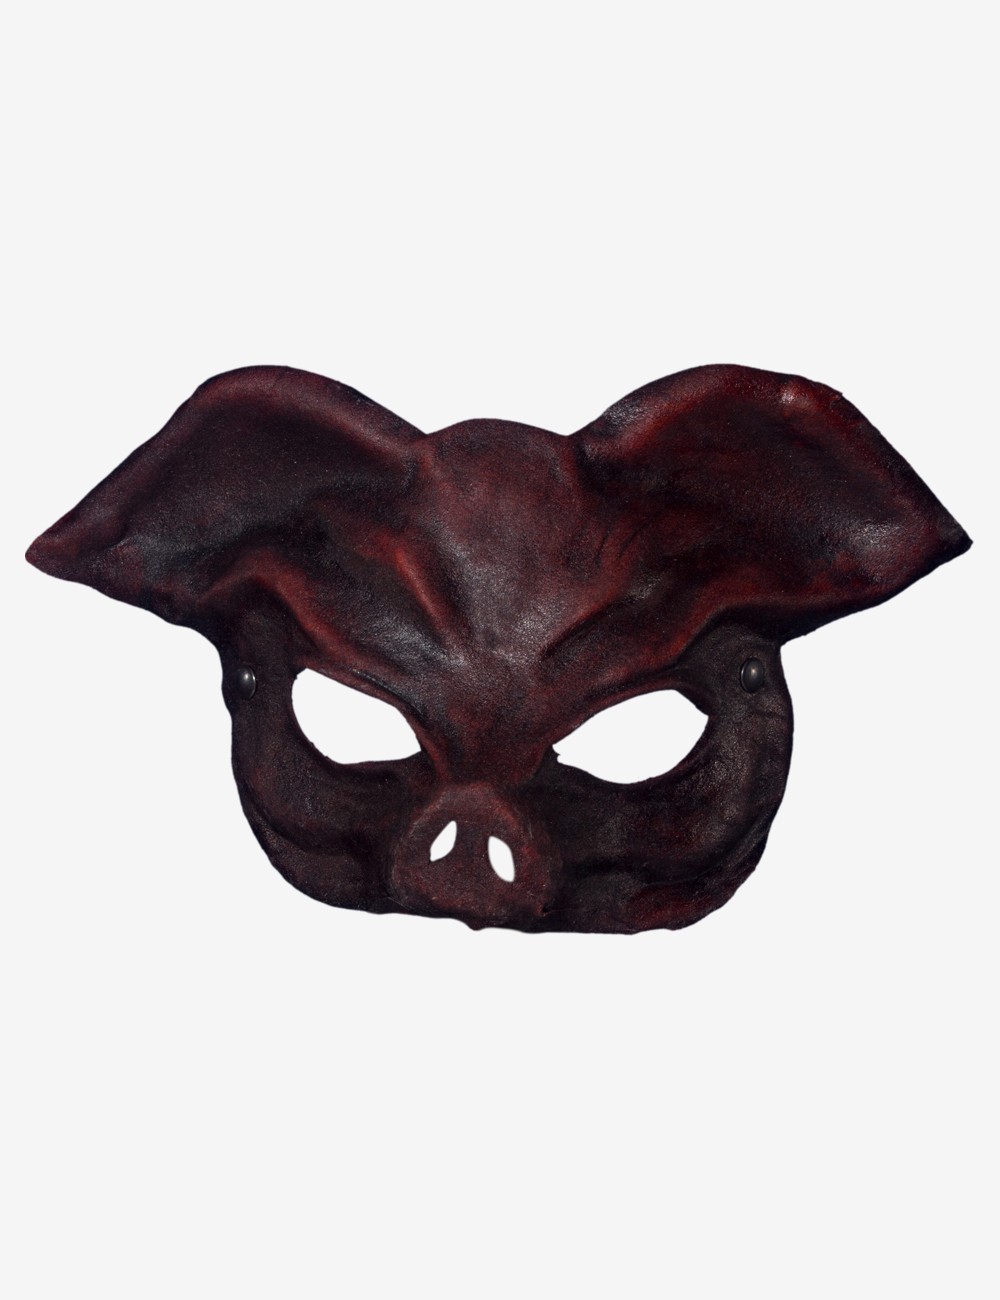 Animal Masks - Pig Mask - Half Mask - MASKS Masquerade, Venetian